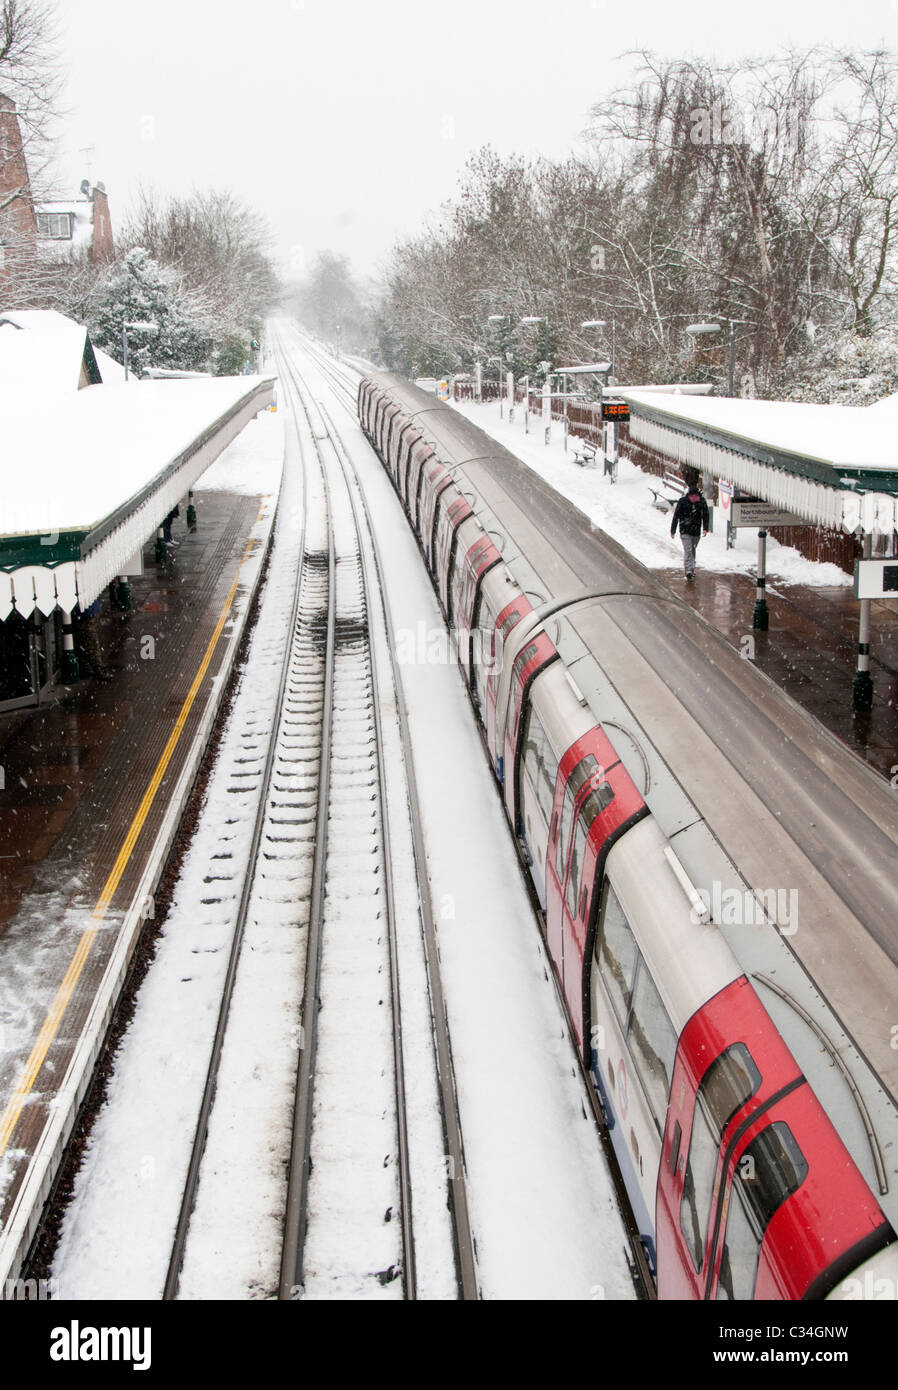 Heavy snowfall causing problems on tube, London, UK Stock Photo